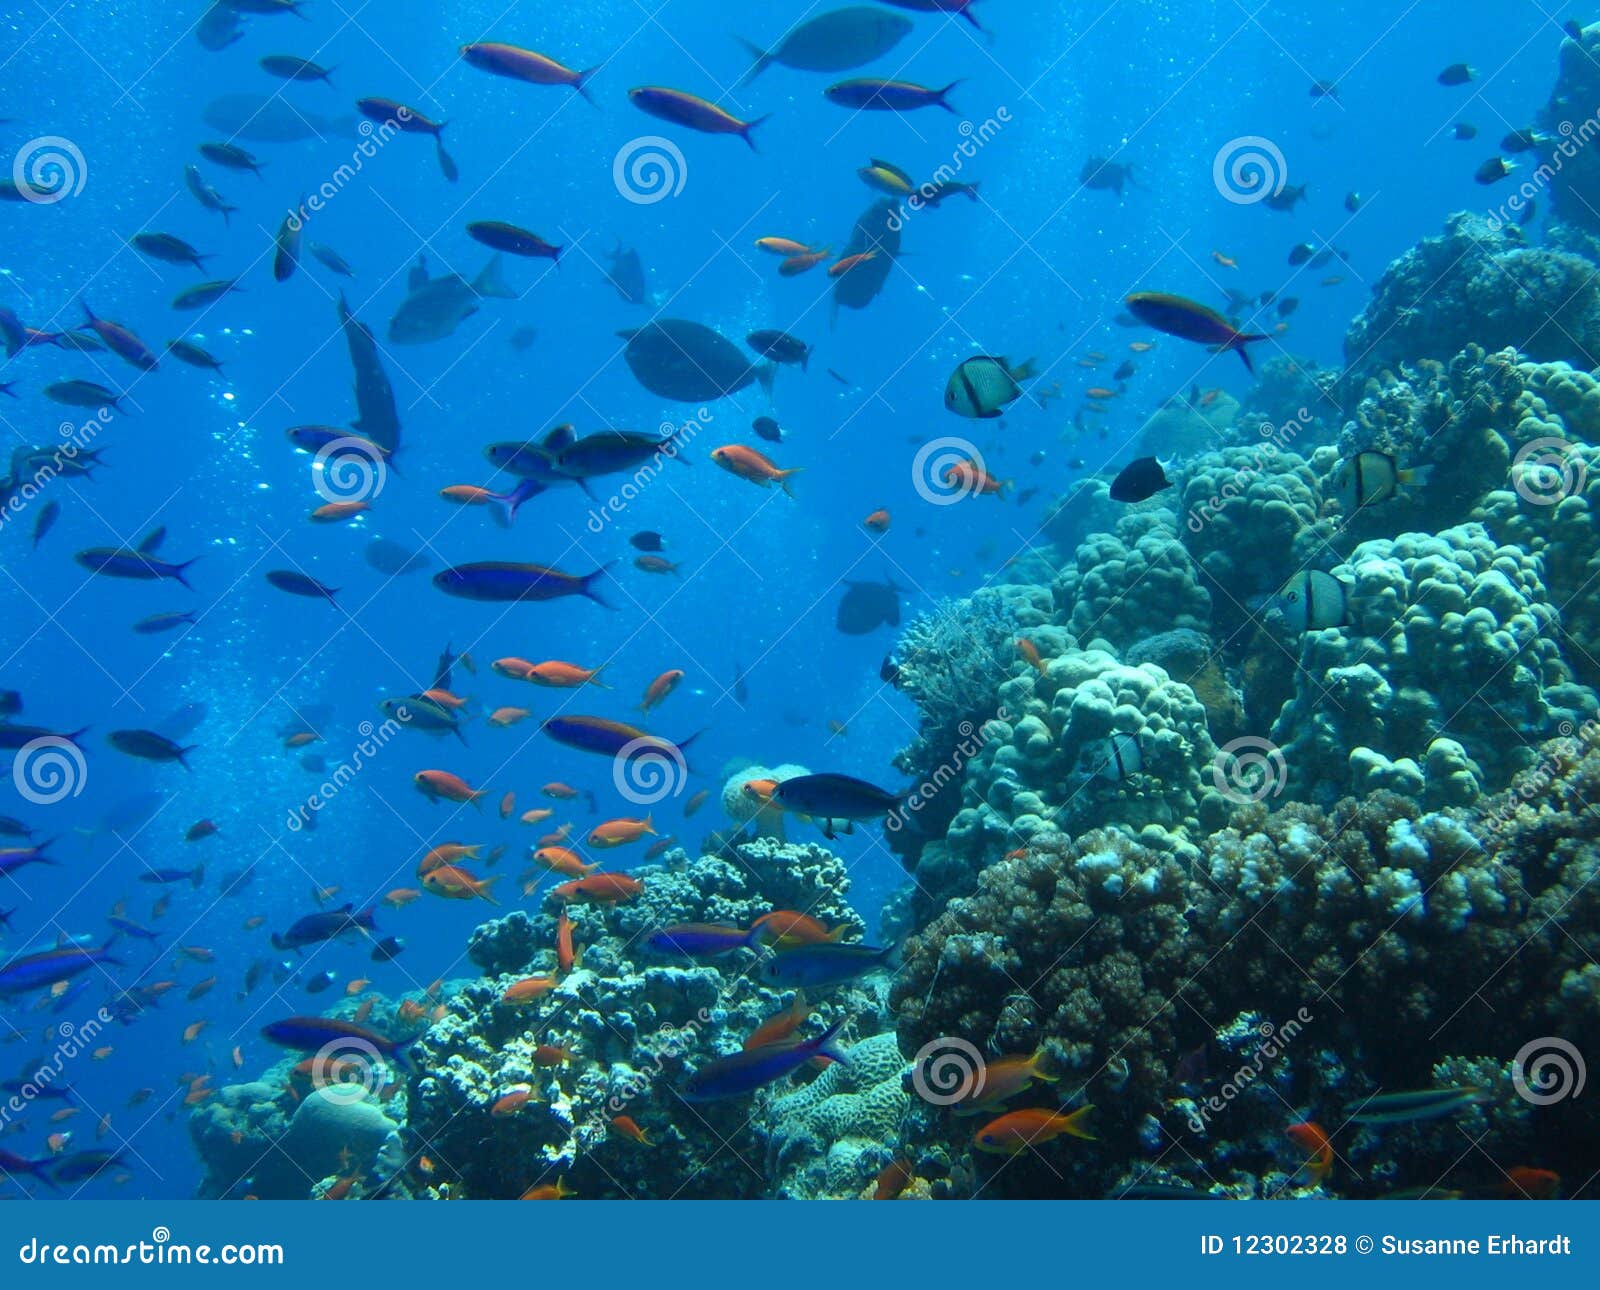 Underwater World stock photo. Image of dive, reef, deep - 12302328